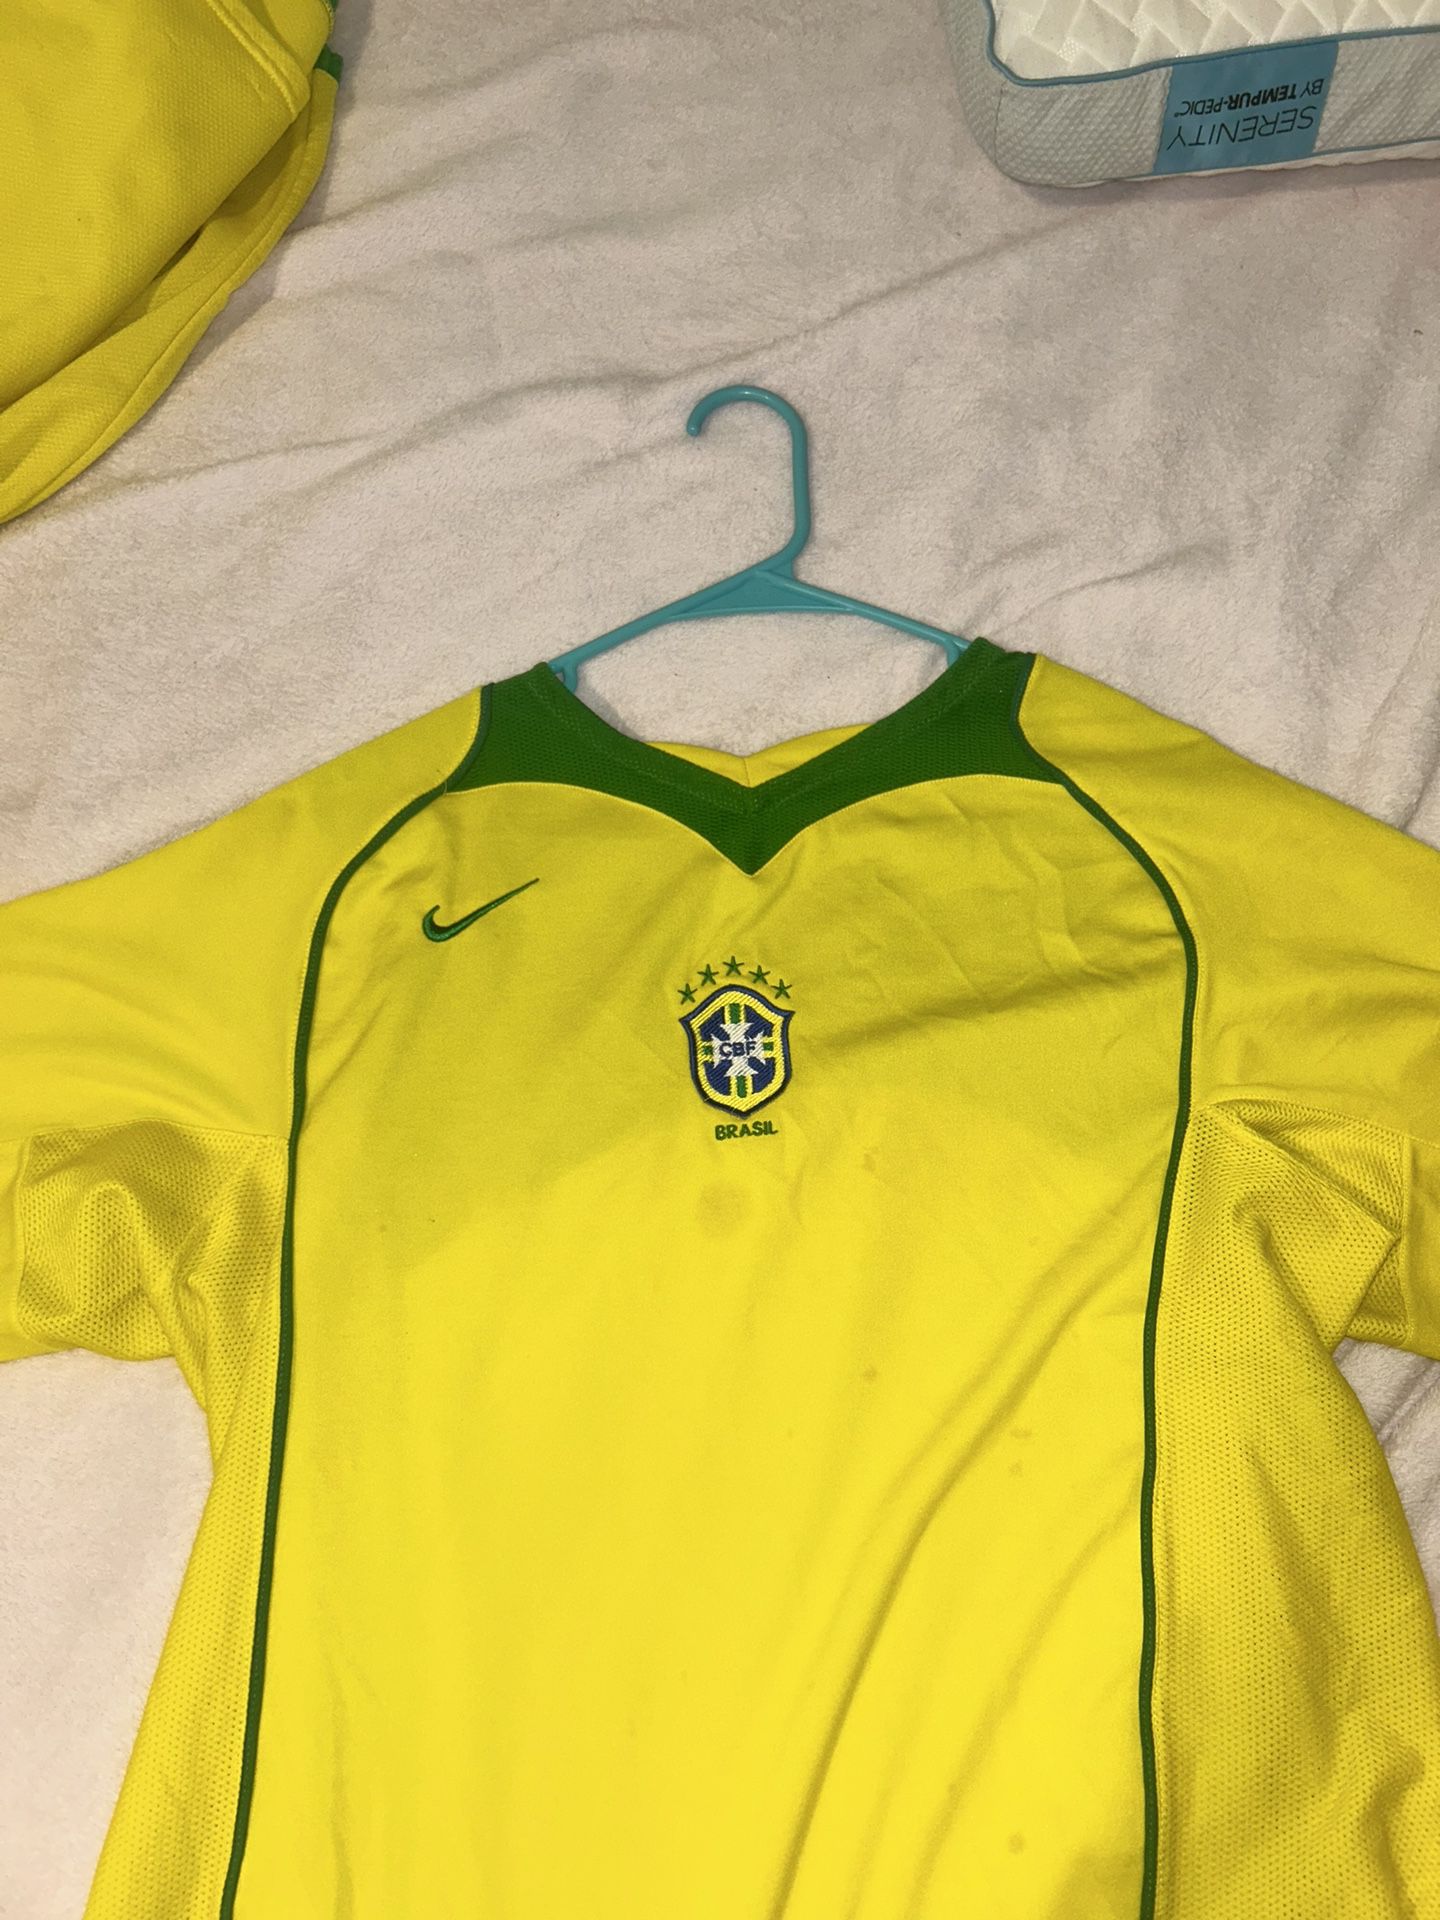 Retro Brazil Jersey 